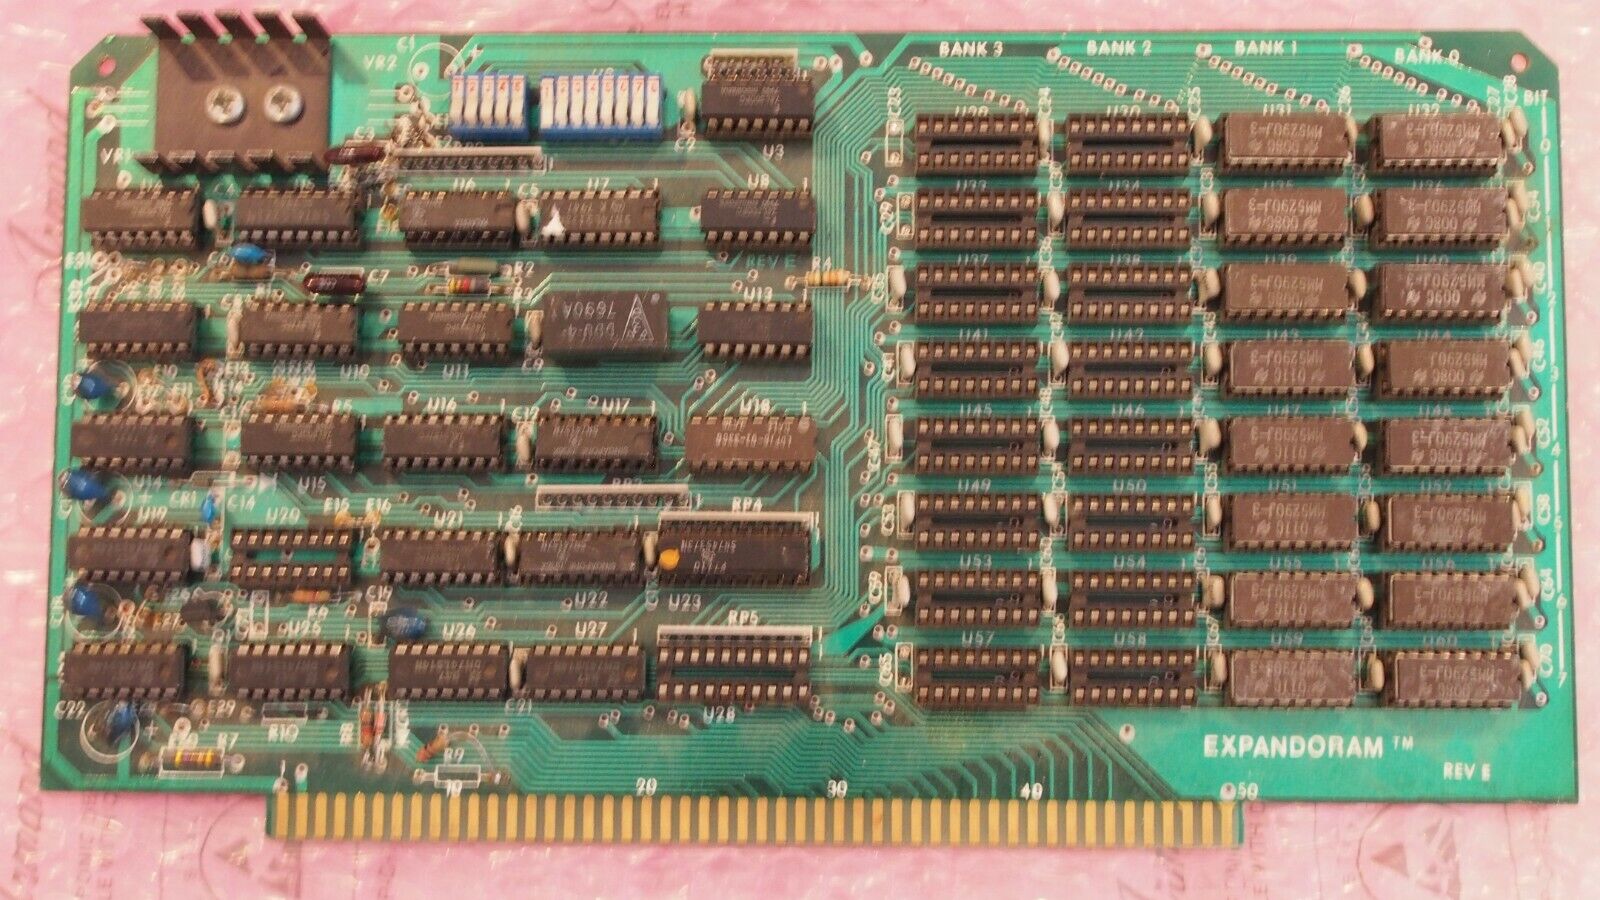 SD ExpandoRAM 32K/64K DYNAMIC MEMORY IMSAI ALTAIR 1976 pre IEEE696